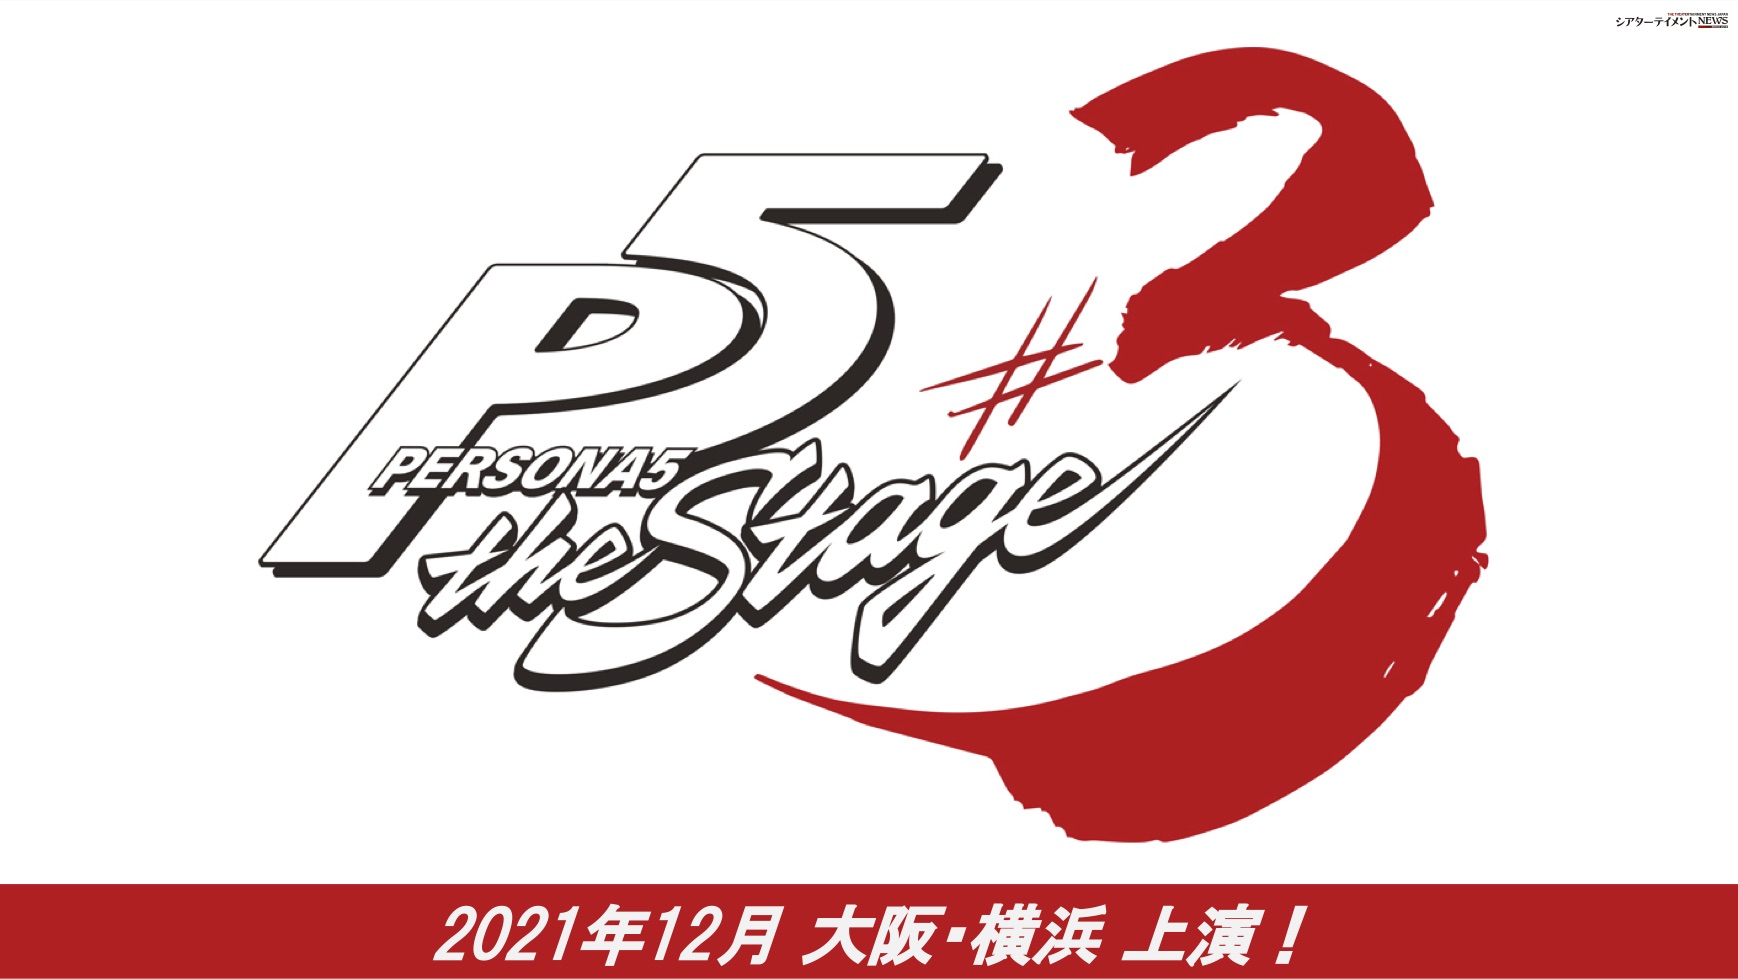 Persona5 The Stage 3 21年12月大阪 横浜にて上演 シアターテイメントnews